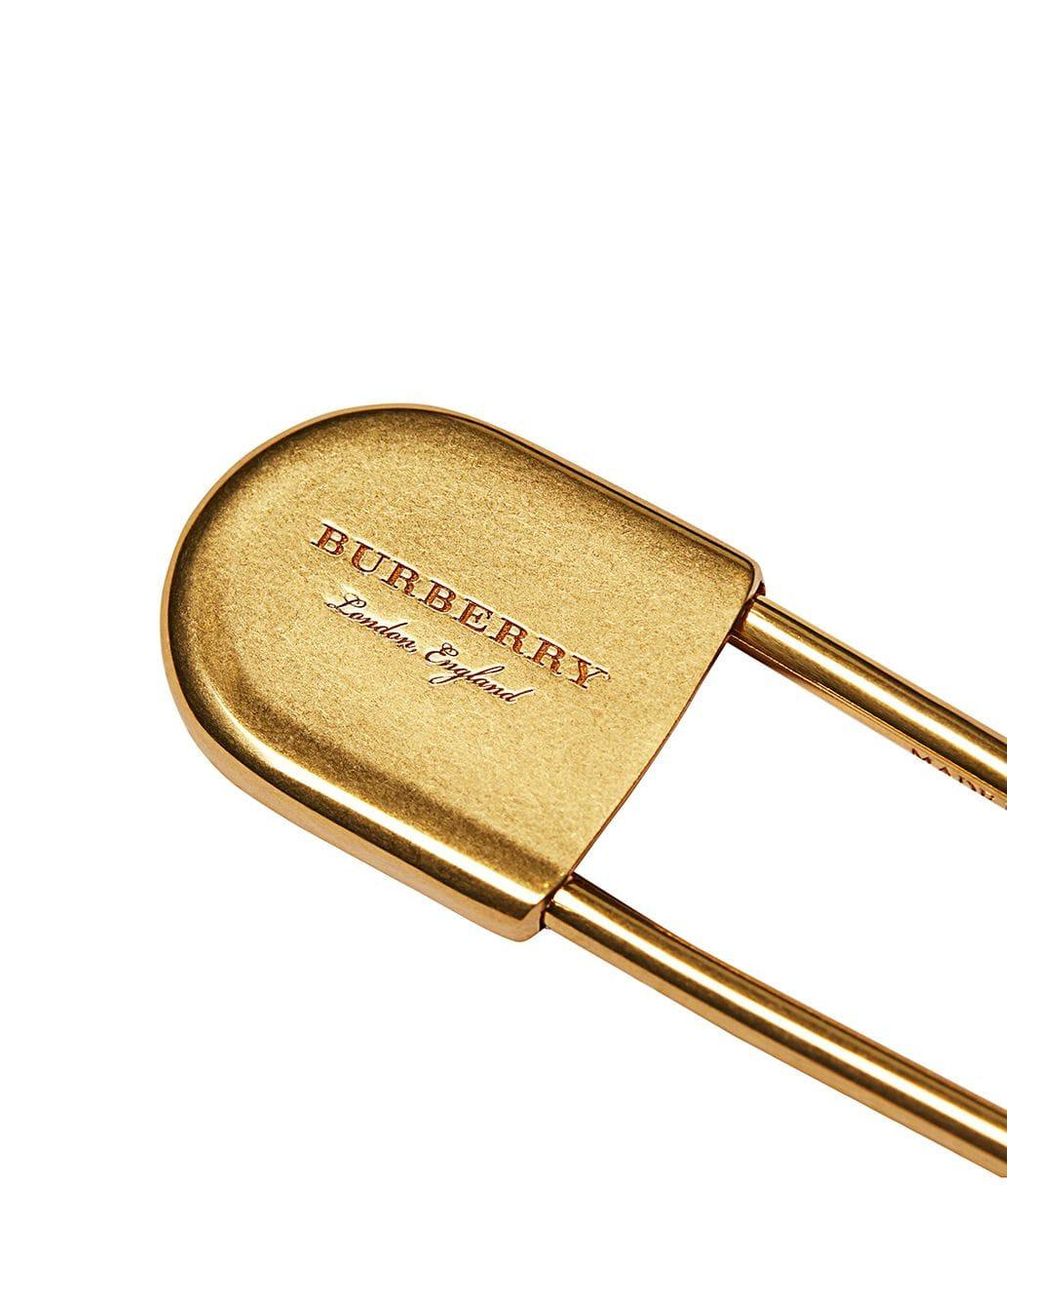 Burberry Women's Metallic Brass Oversized Kilt Pin